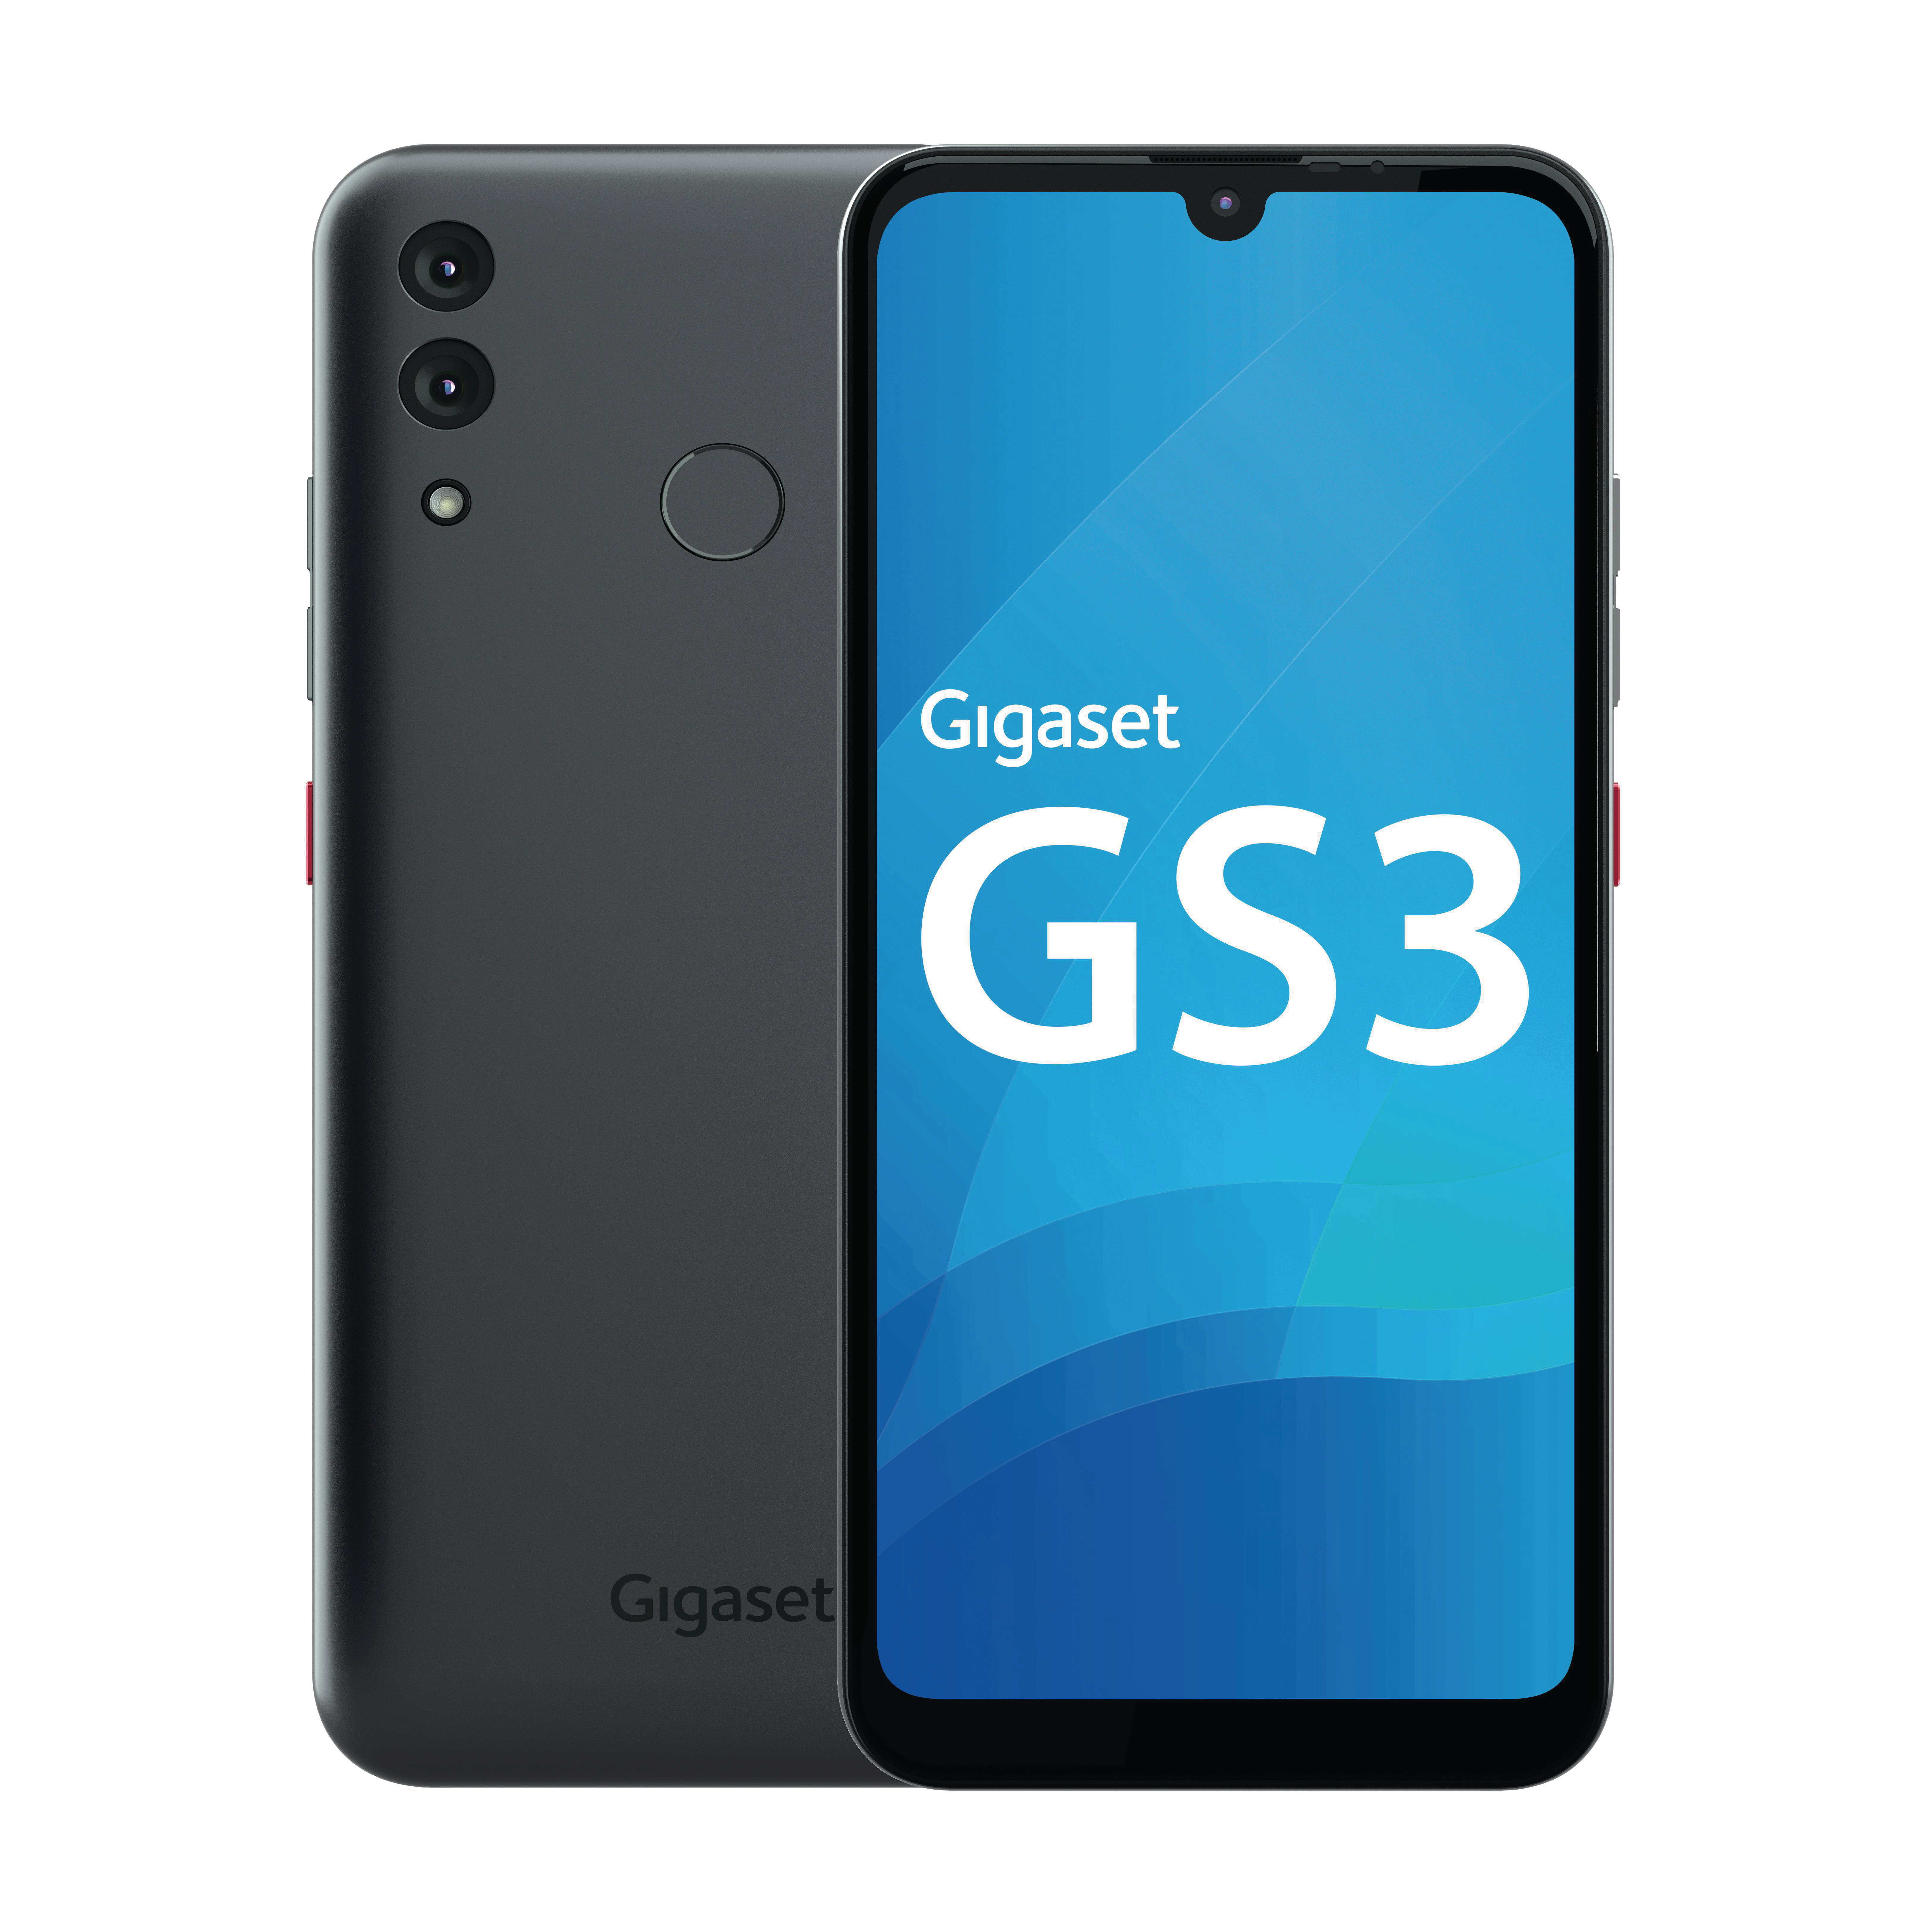 Graphite Grey SIM GIGASET GS3 GB 64 Dual